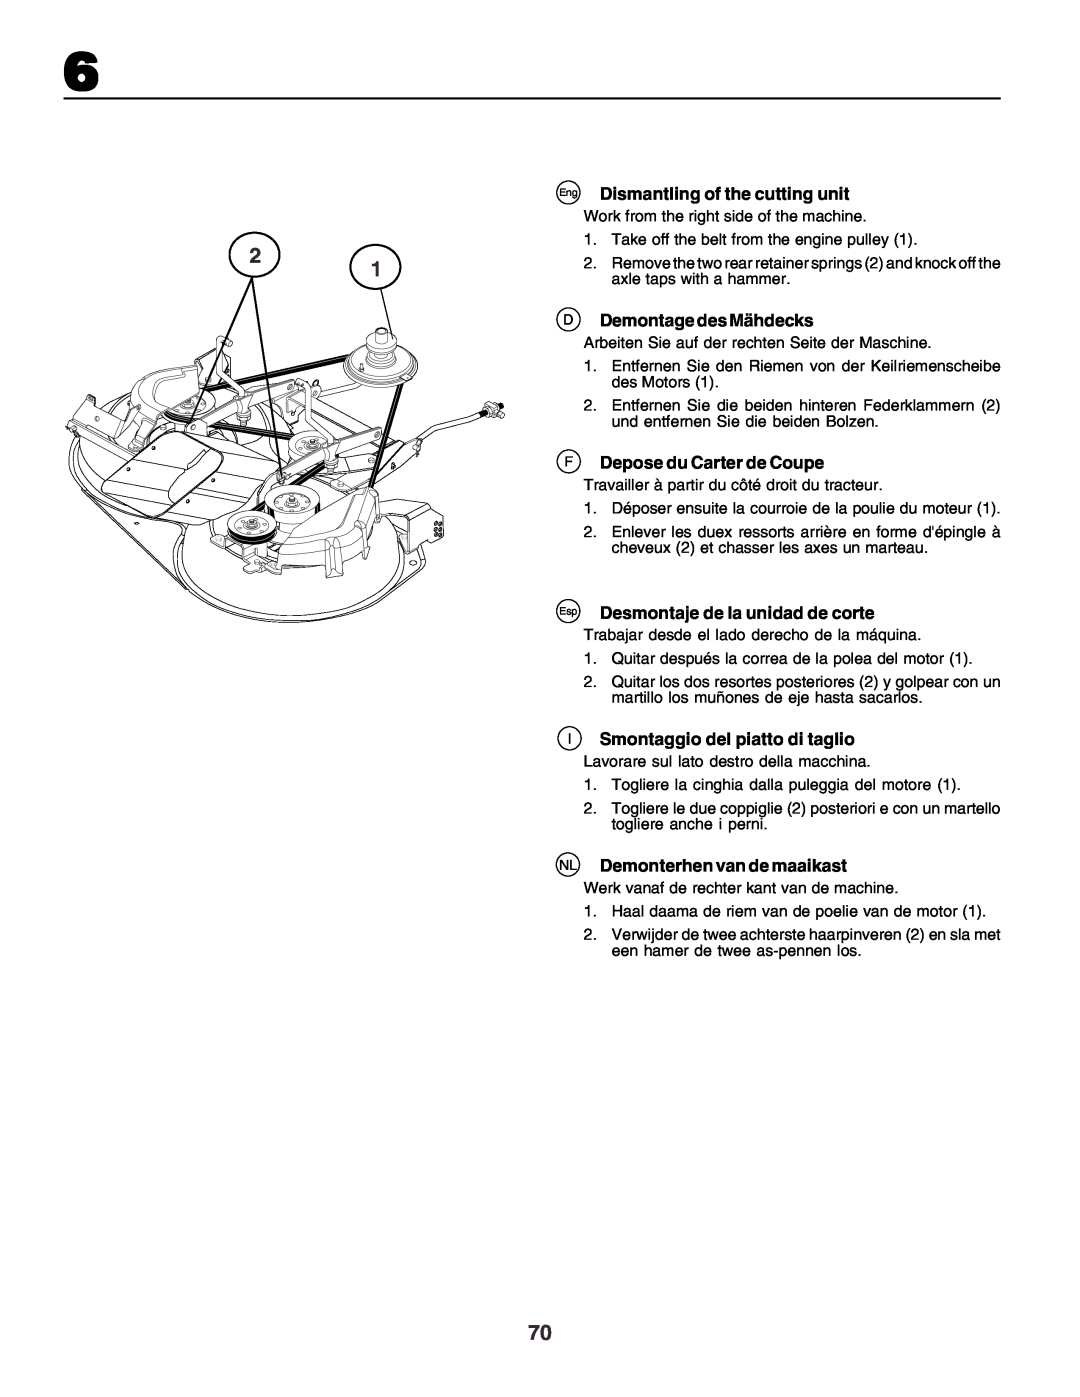 Husqvarna CT130 instruction manual Eng Dismantling of the cutting unit, Demontage des Mähdecks, Depose du Carter de Coupe 